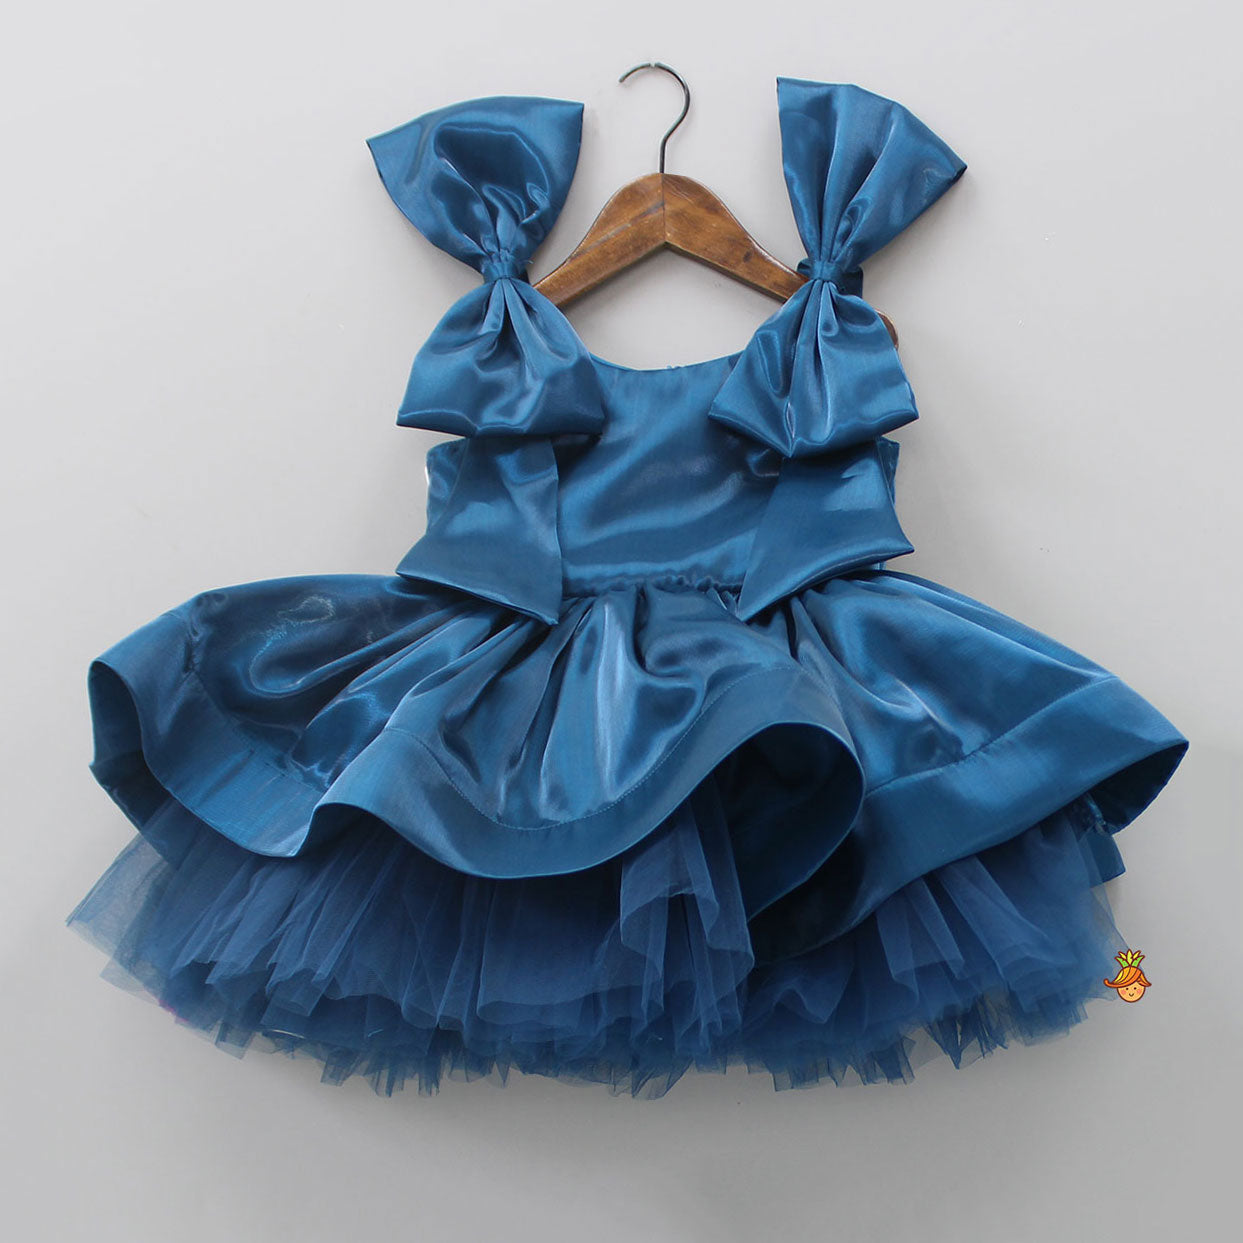 Bows Enhanced Gorgeous Blue Dress